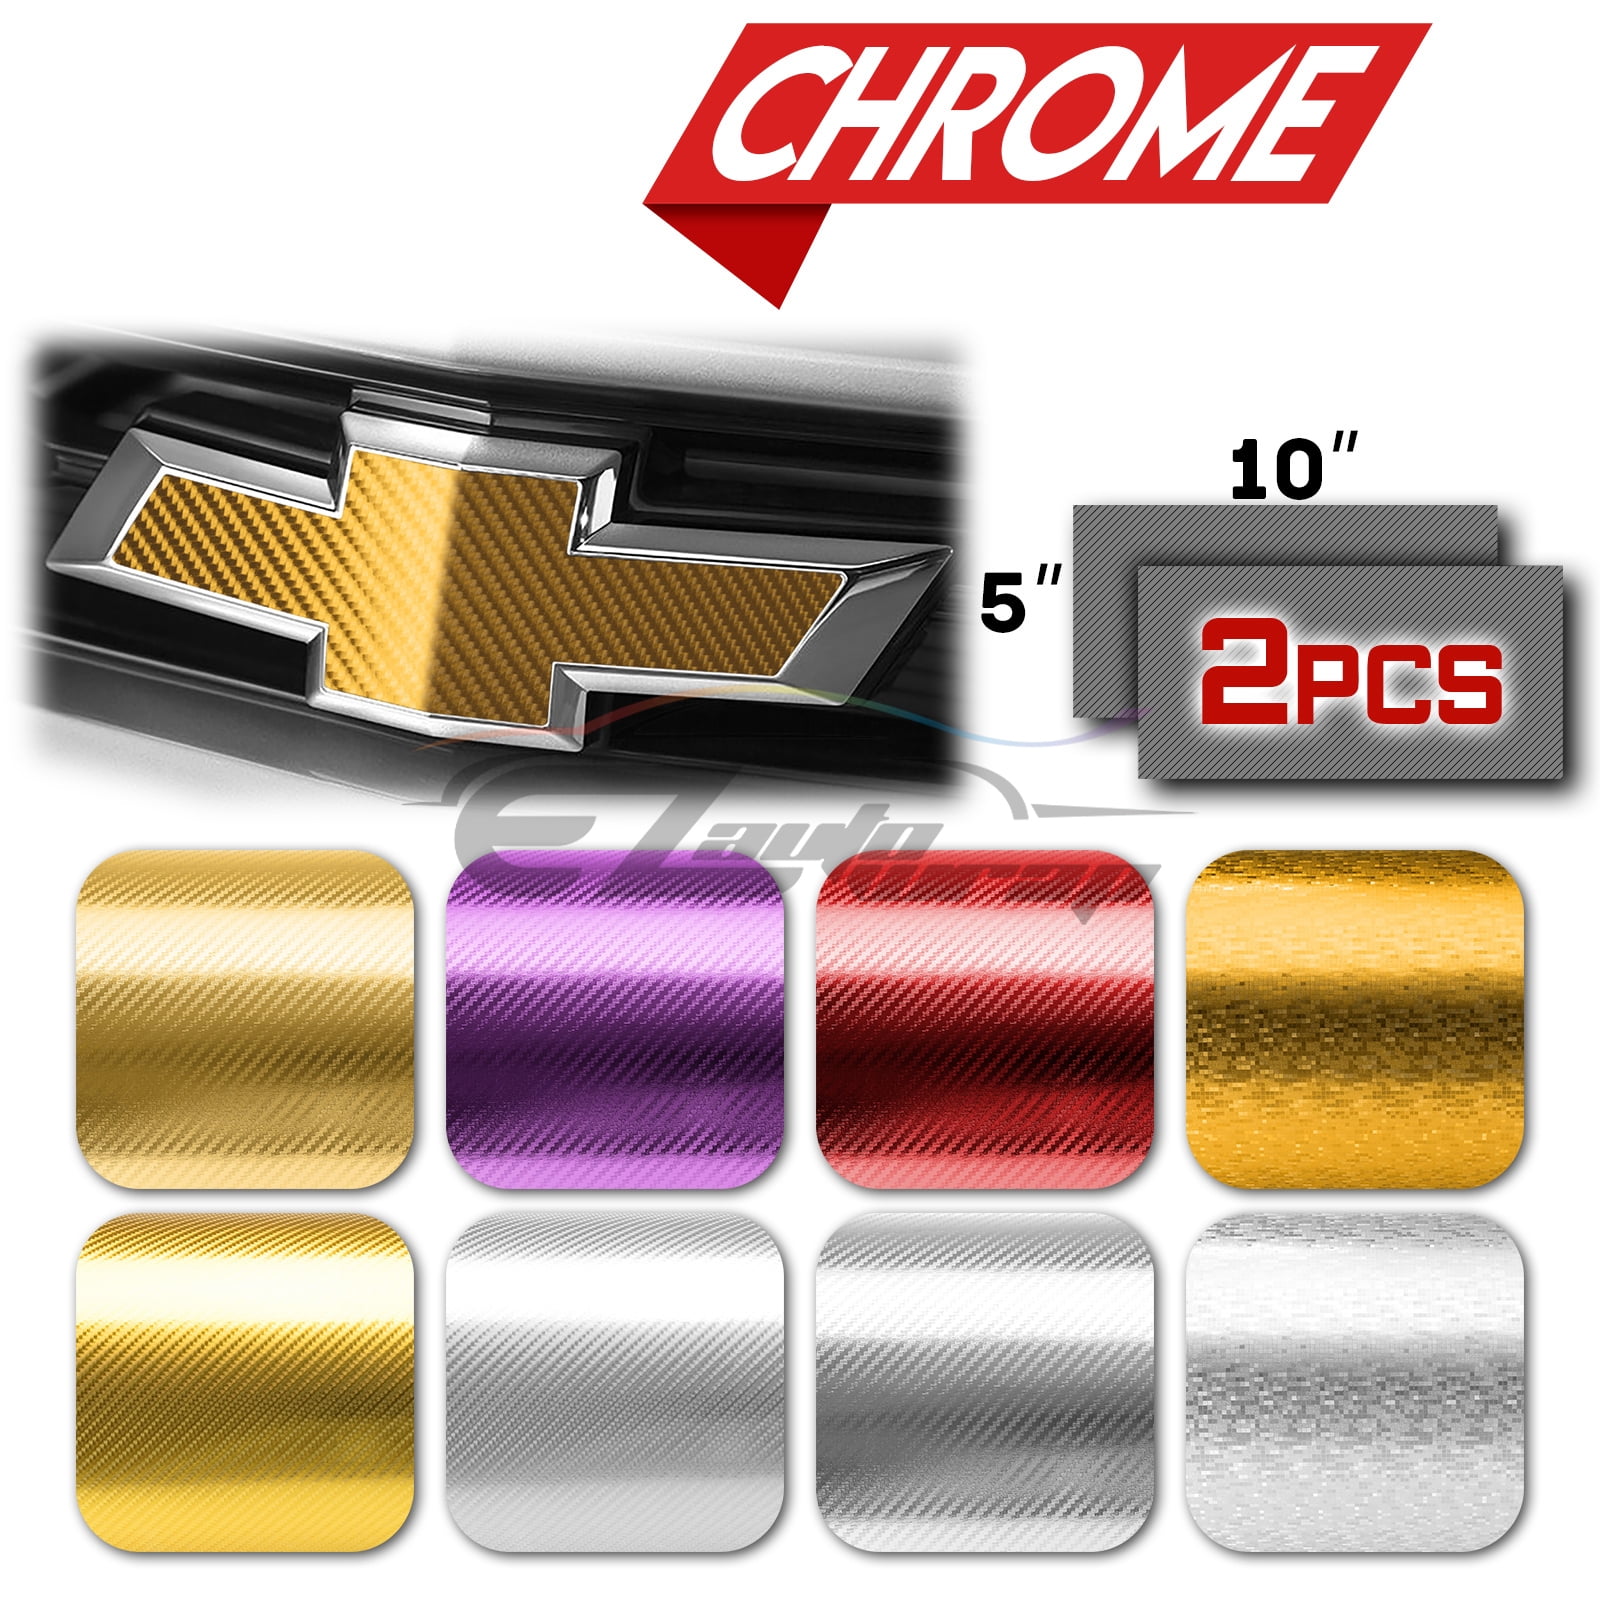 2x Chrome LTZ  3D Metal Emblems Truck Decals Badges For Chevy Silverado